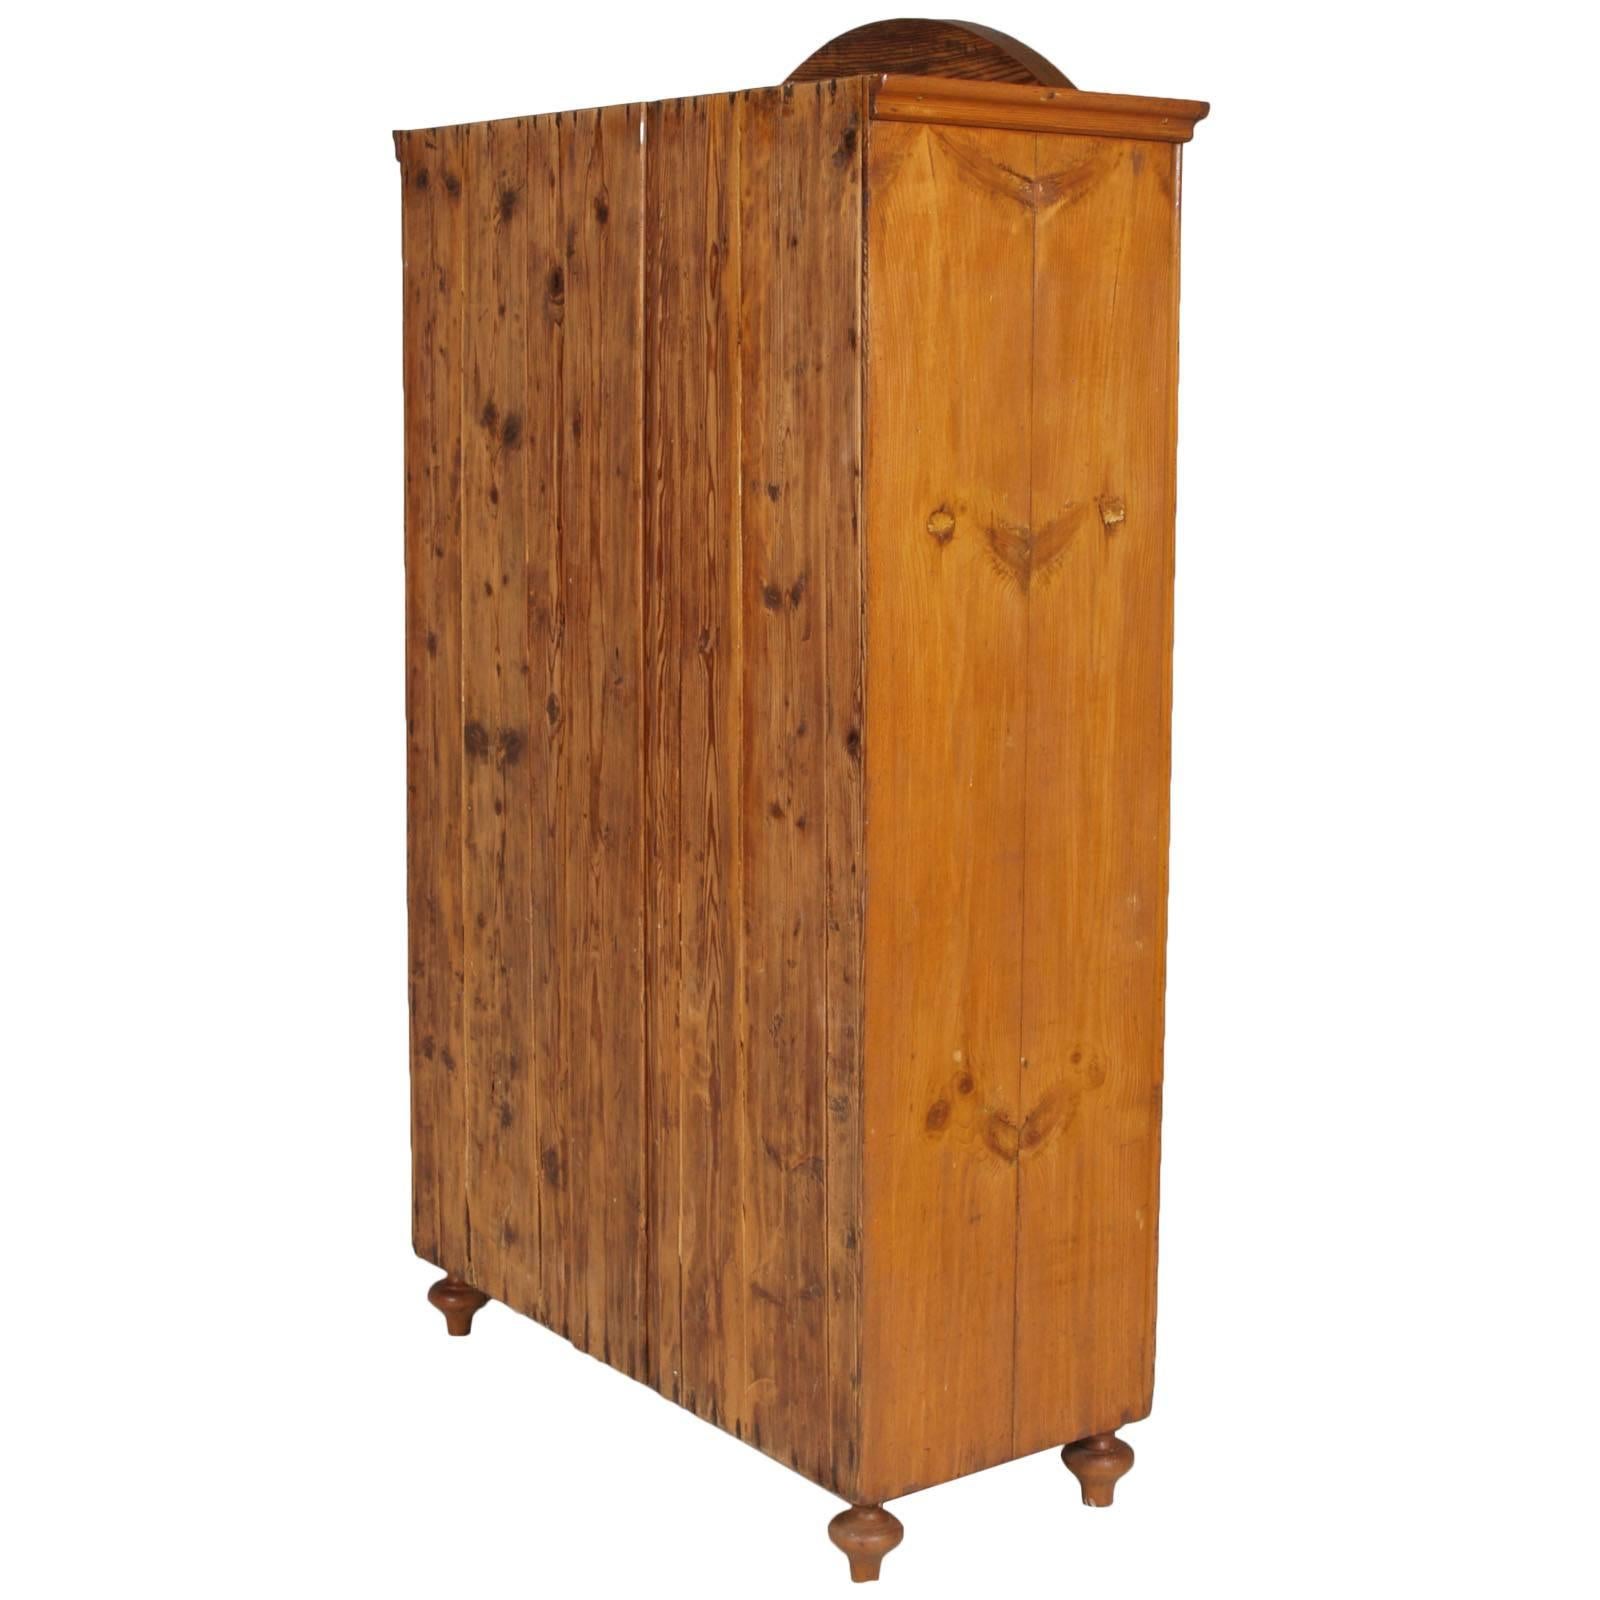 Fir Austrian Tyrol 1860s Wardrobe Cabinet Cupboard in Solid Wood Polished to Wax